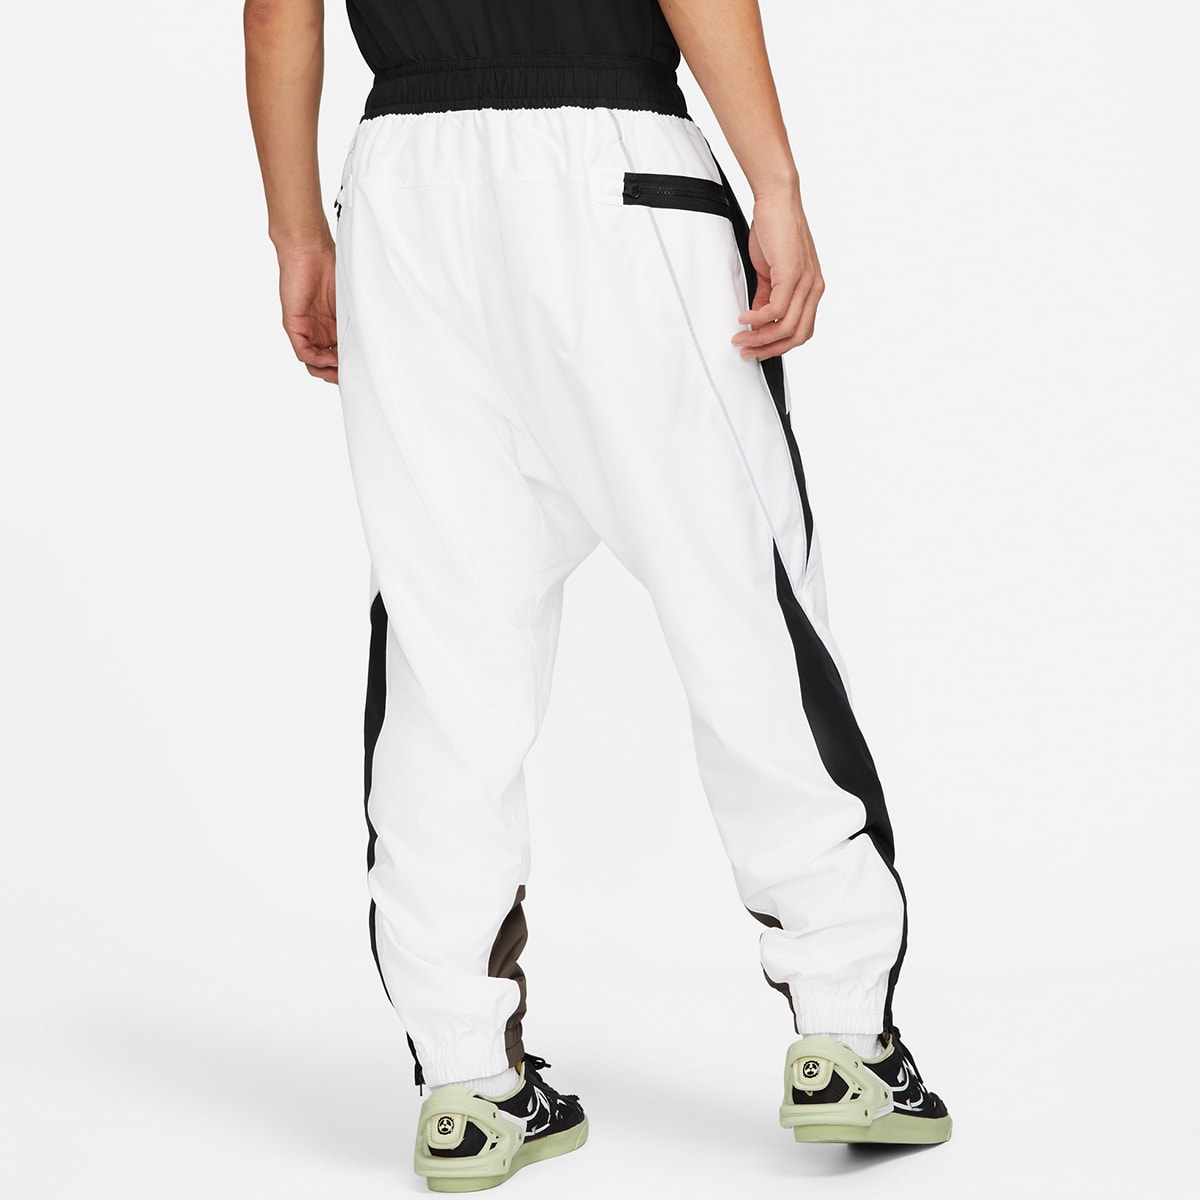 Nike x Acronym Woven Pant (White & Multi) | END. Launches